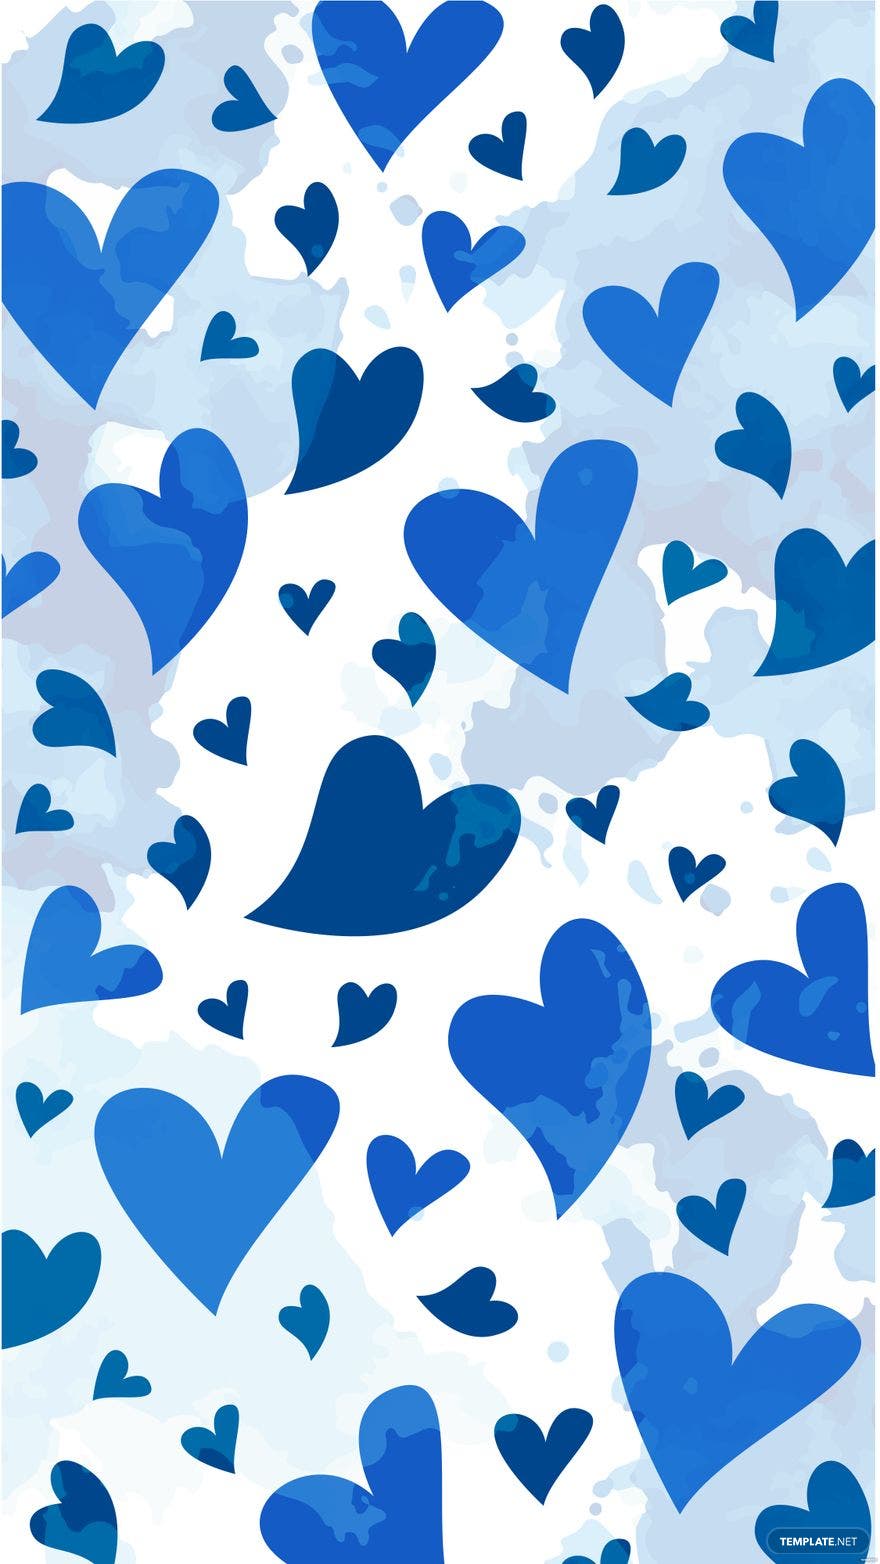 Free Watercolor Blue Heart Background, Illustrator, JPG, SVG